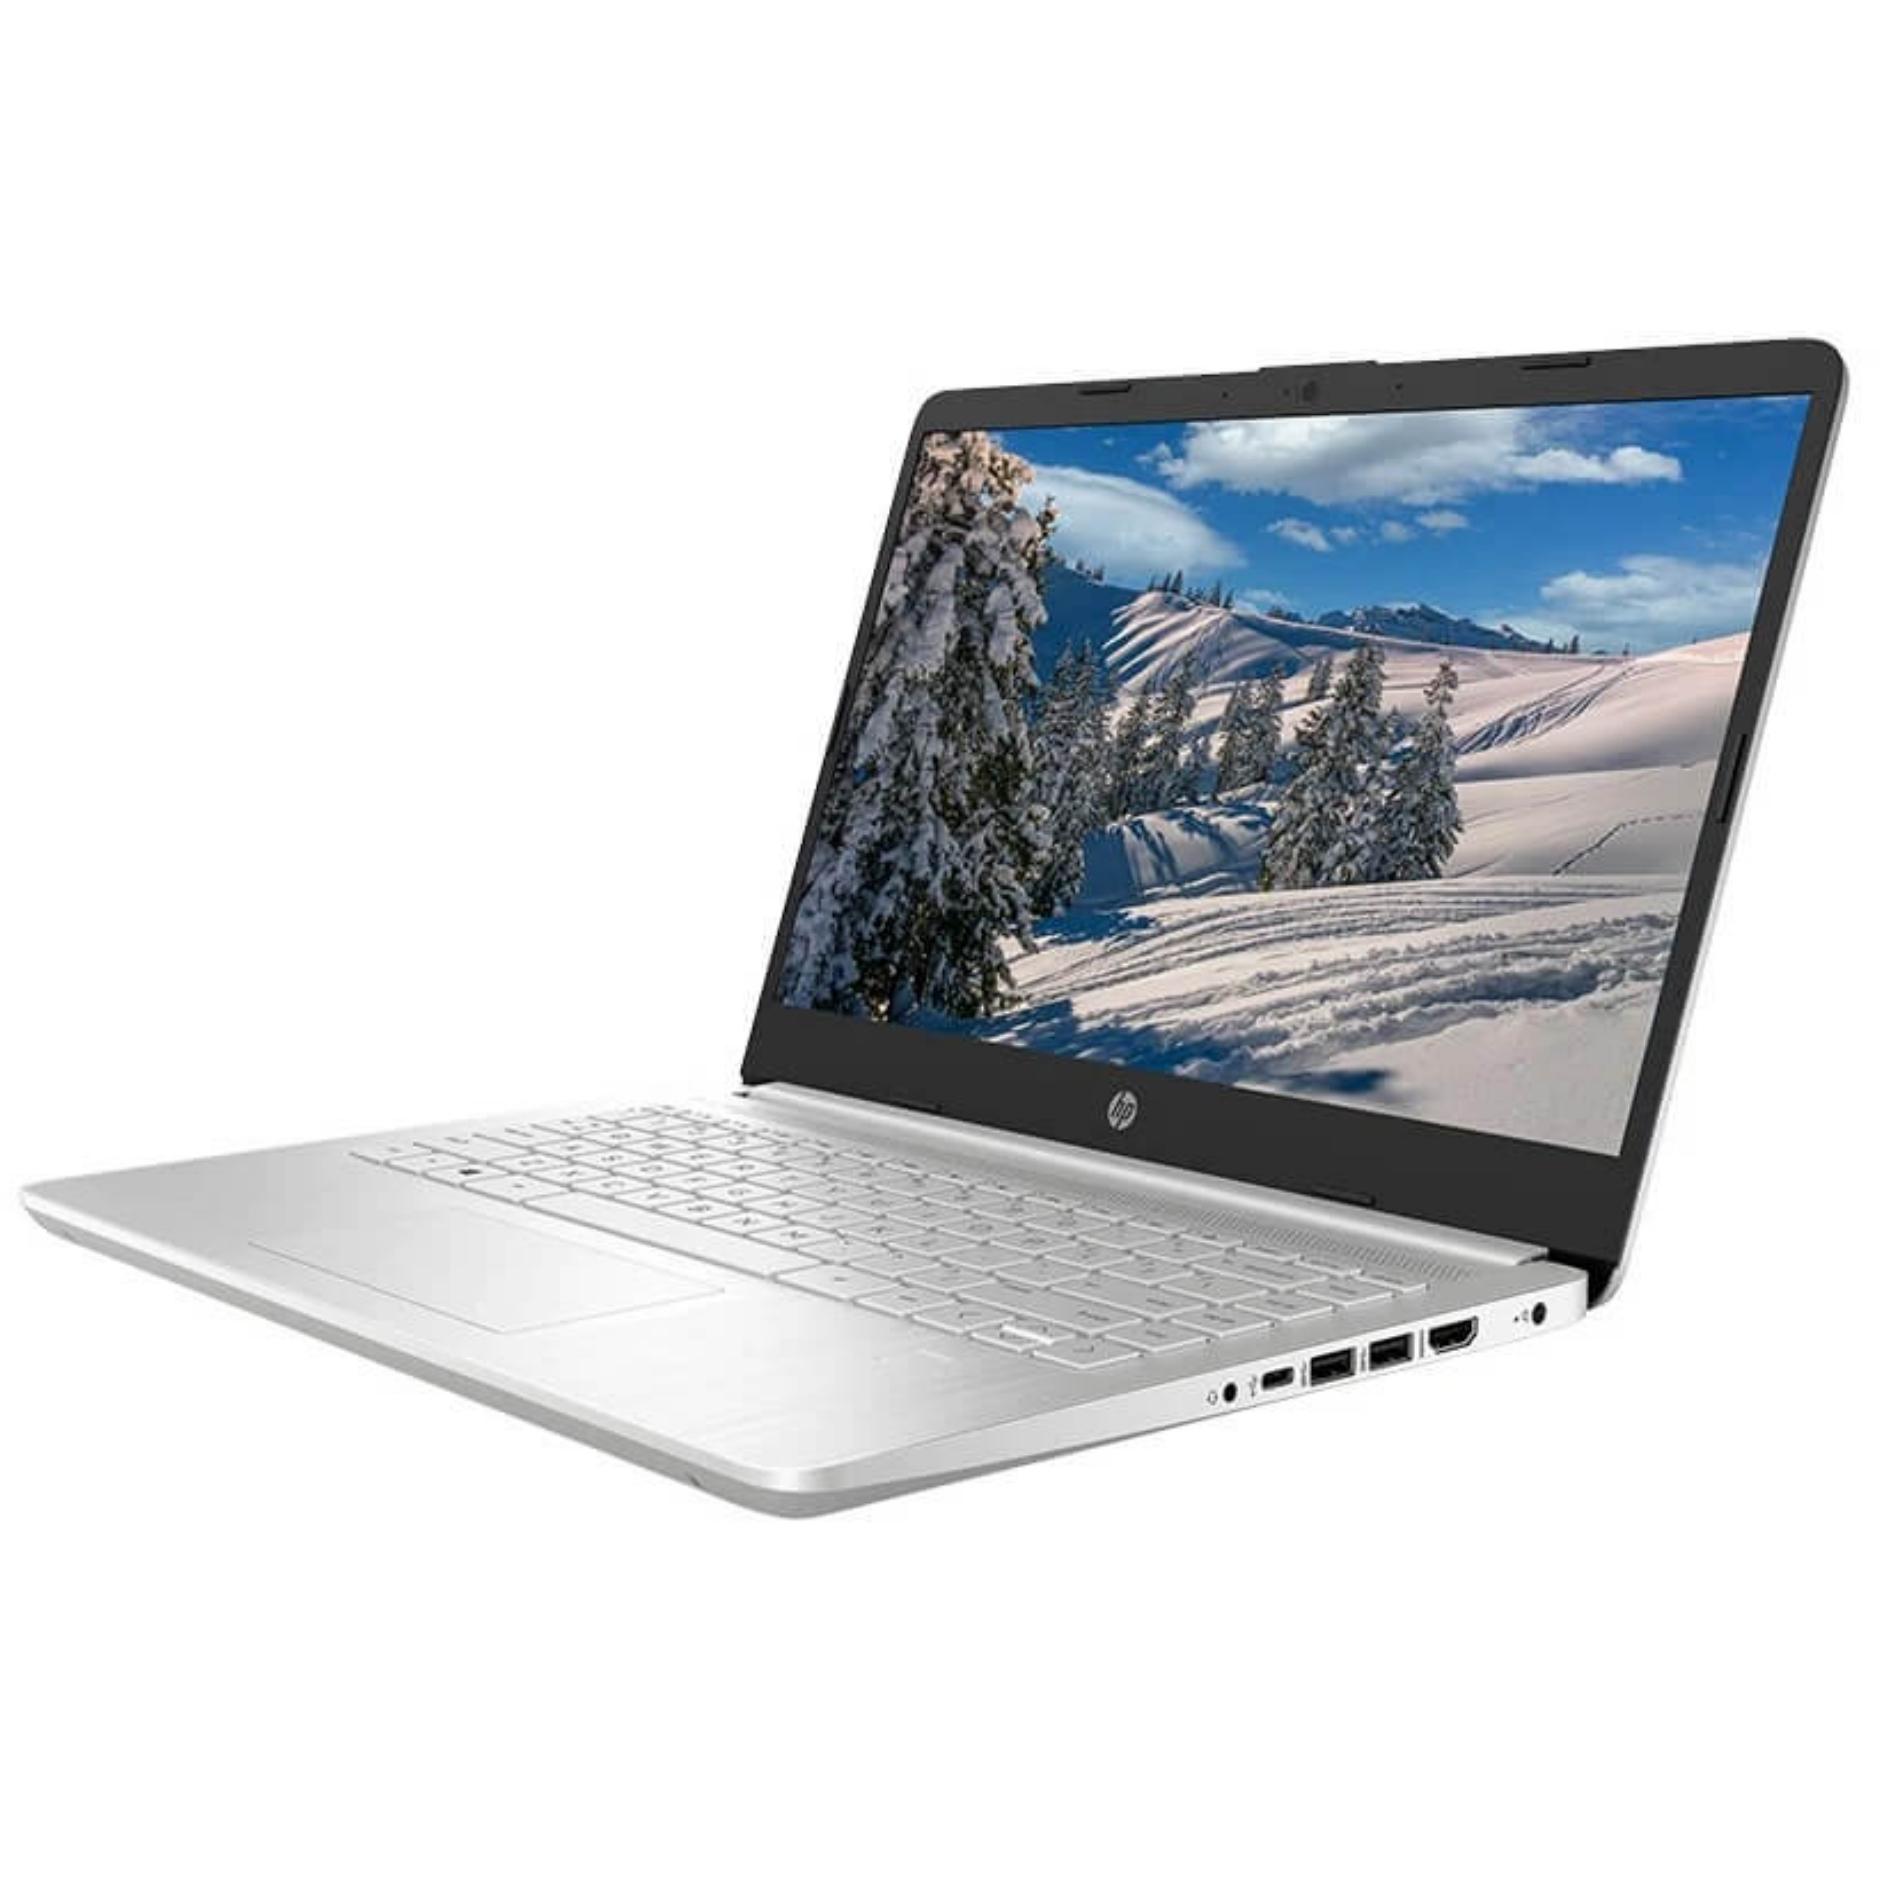 Laptop i5 4gb 250gb 2